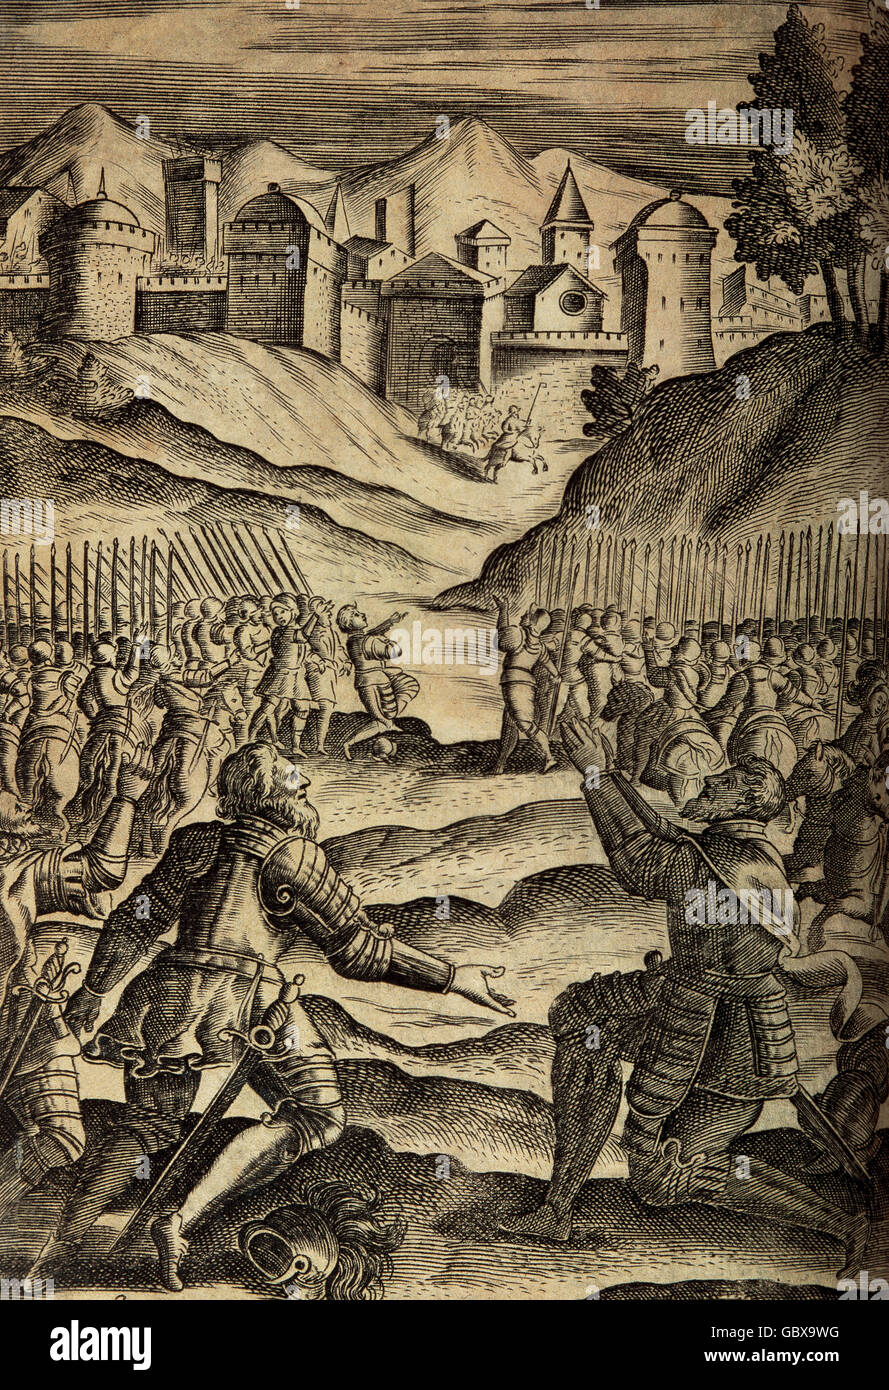 Torquato Tasso (1544-1595). Italian poet. La Gerusalemme Liberata (Jerusalem Delivered), 1580. Engraving. Stock Photo